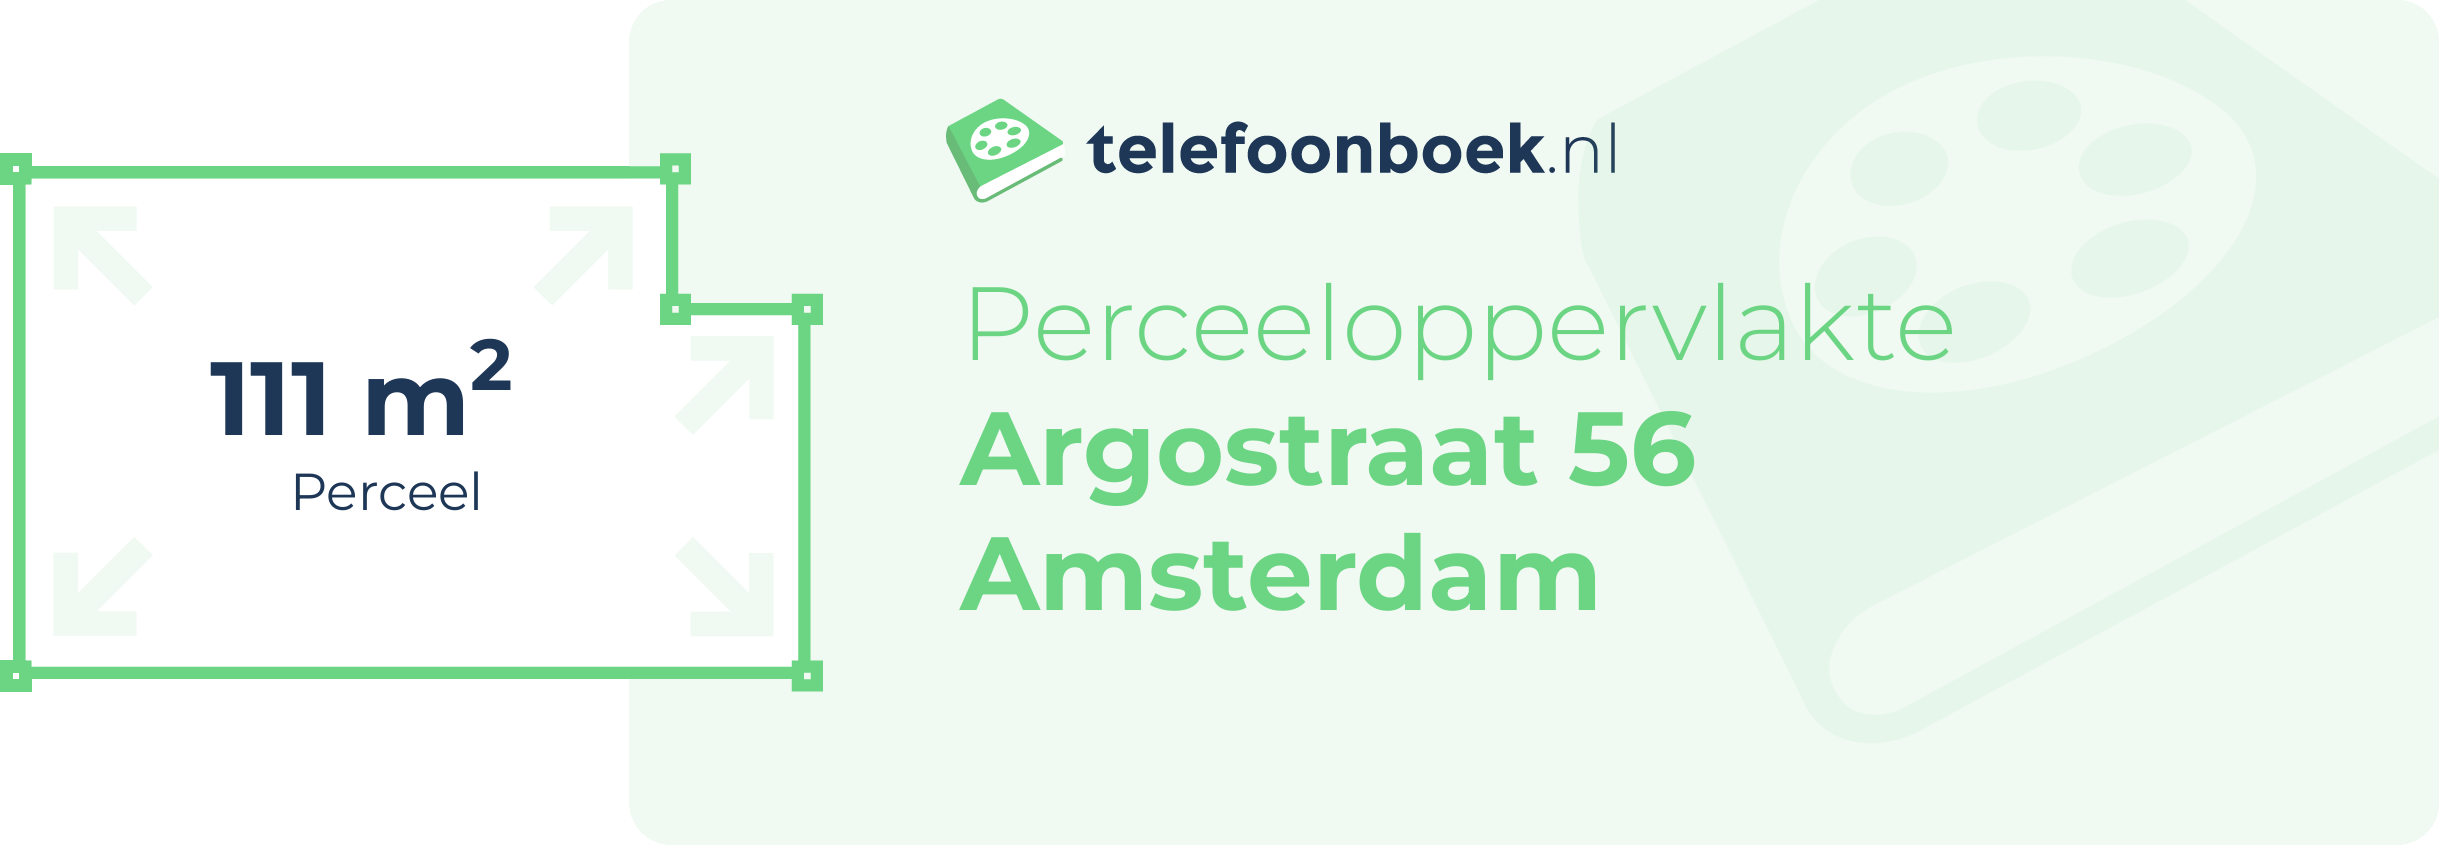 Perceeloppervlakte Argostraat 56 Amsterdam